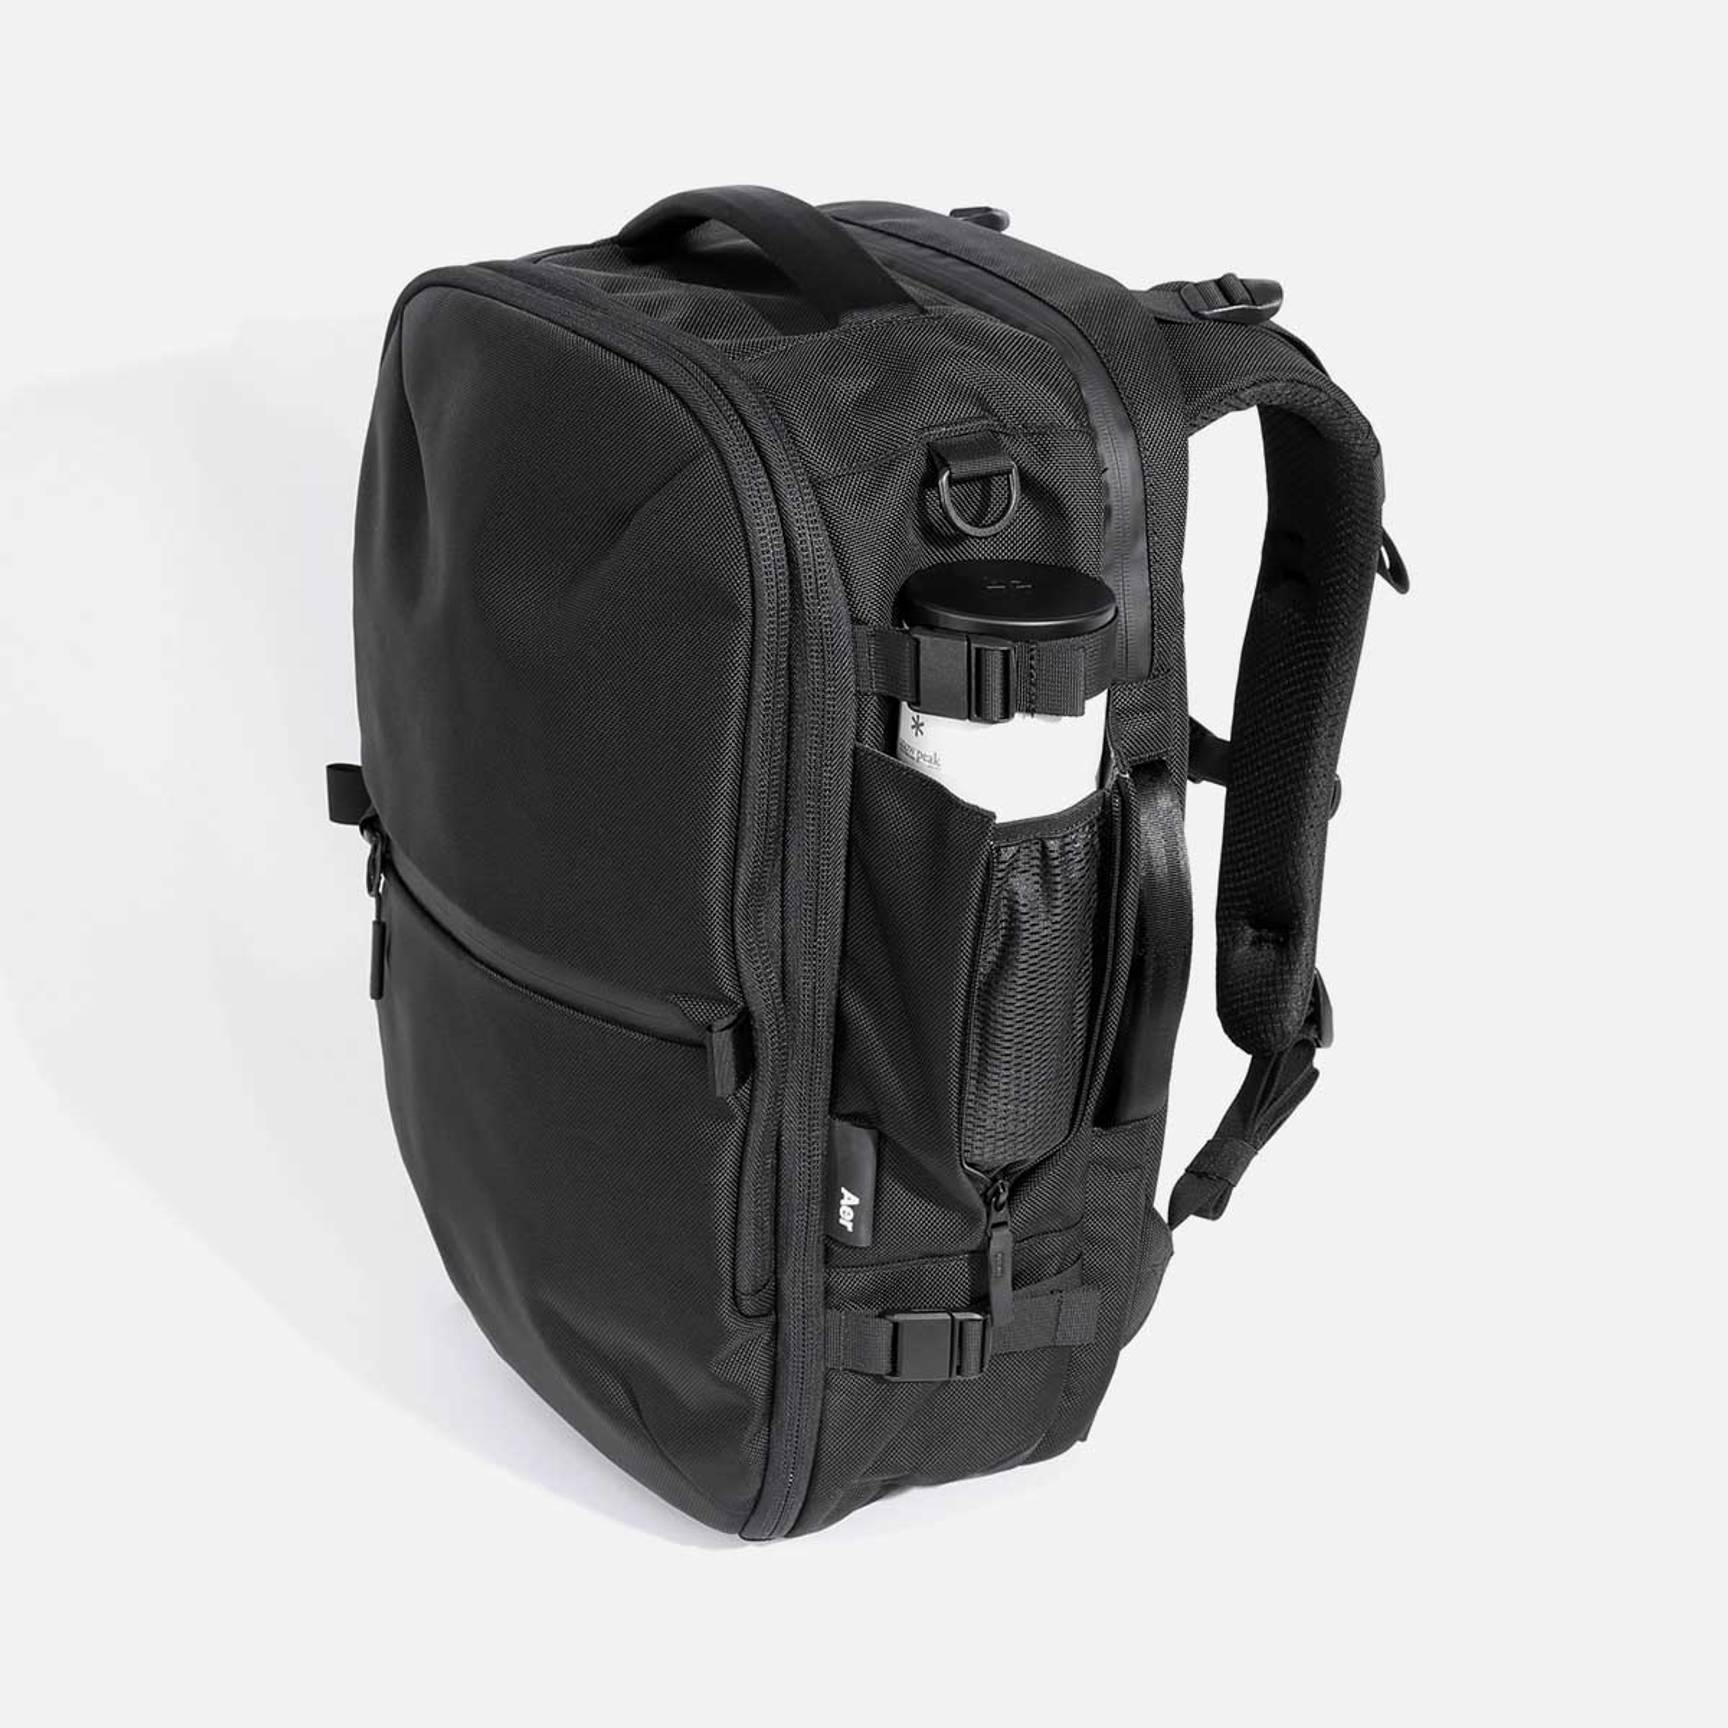 Get Fashion Backpack/ Travel Bag f Online Price in Sri Lanka